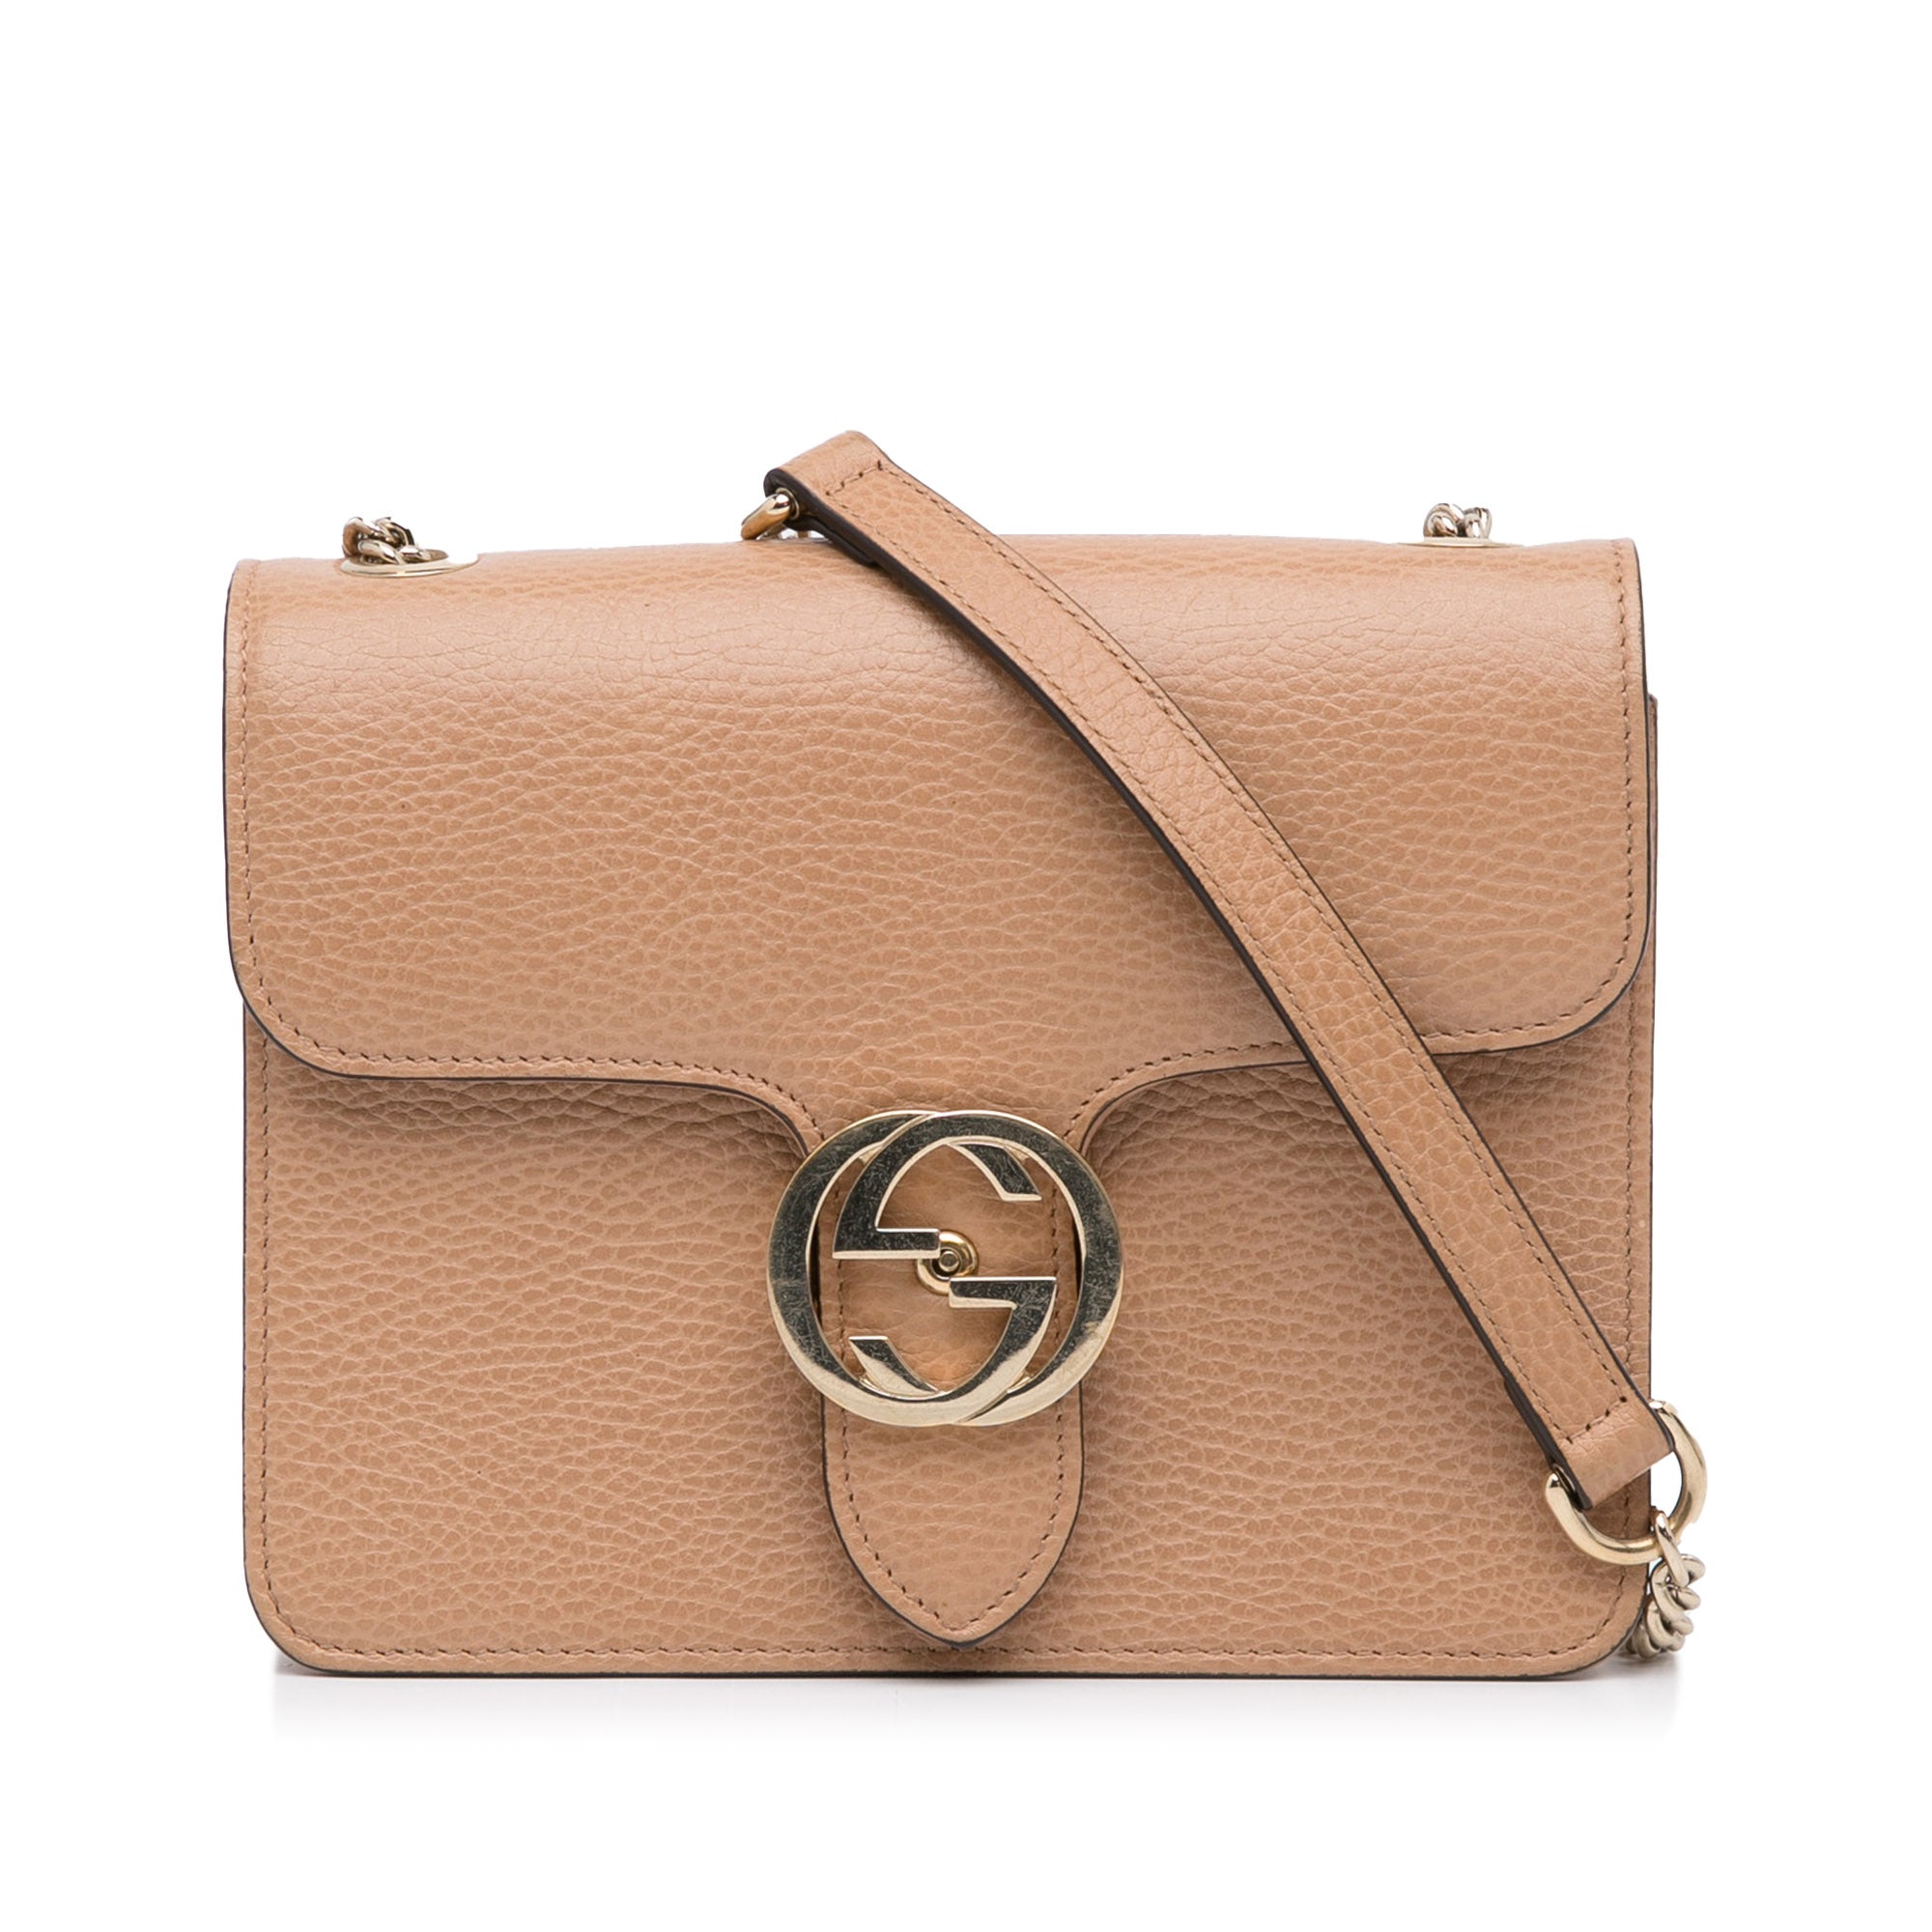 Gucci Dollar Interlocking Shoulder Bag Review 